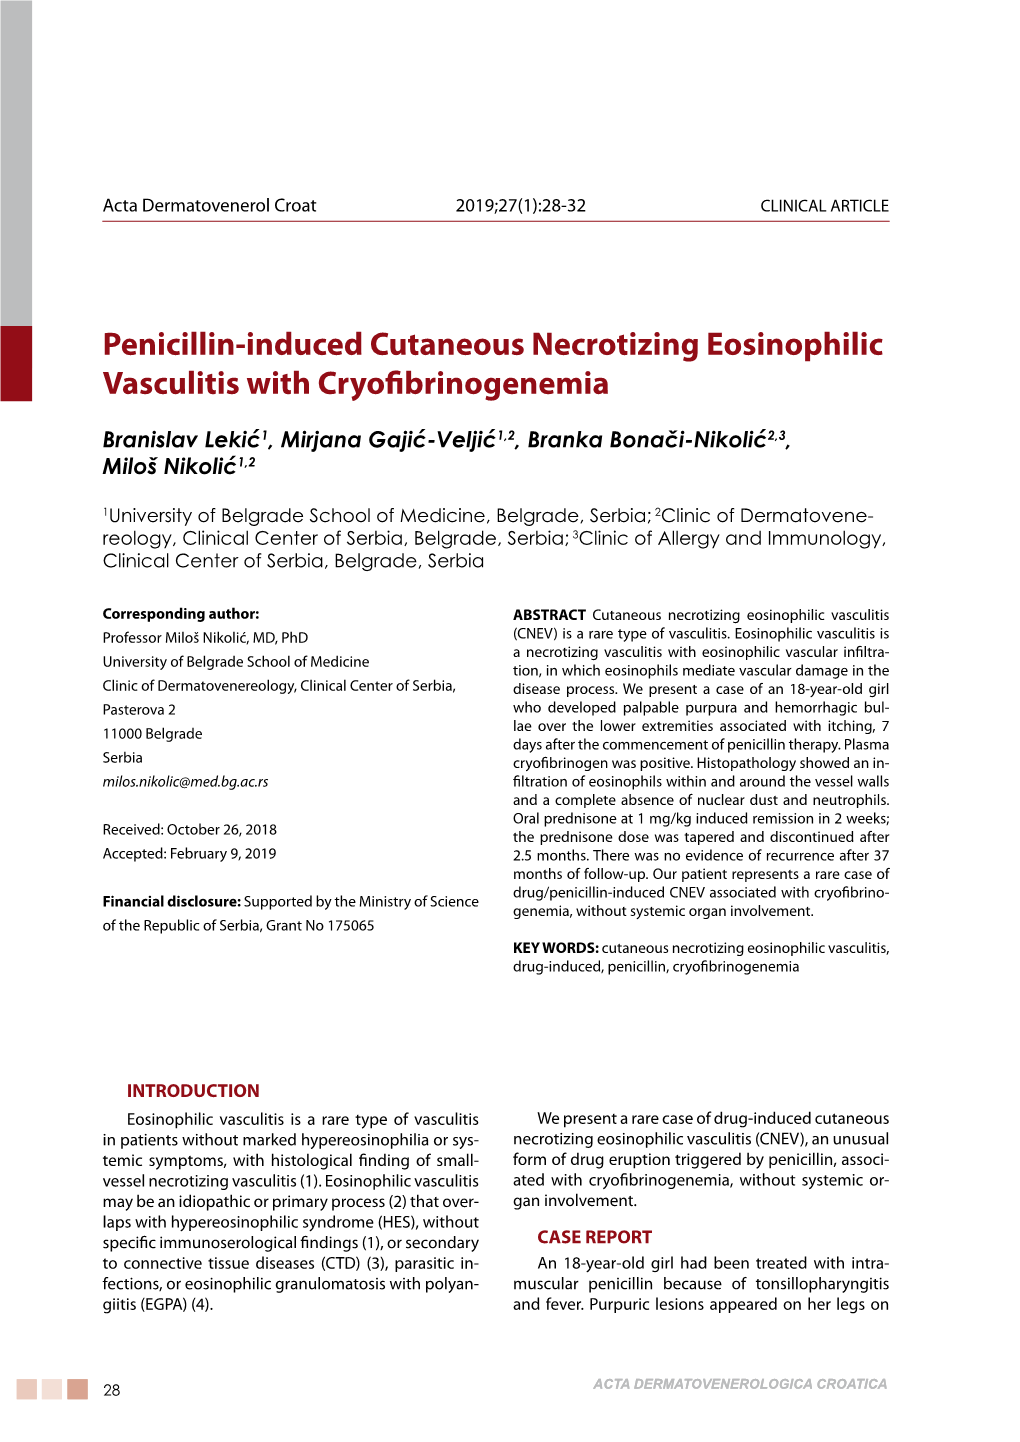 Penicillin-Induced Cutaneous Necrotizing Eosinophilic Vasculitis with Cryofibrinogenemia